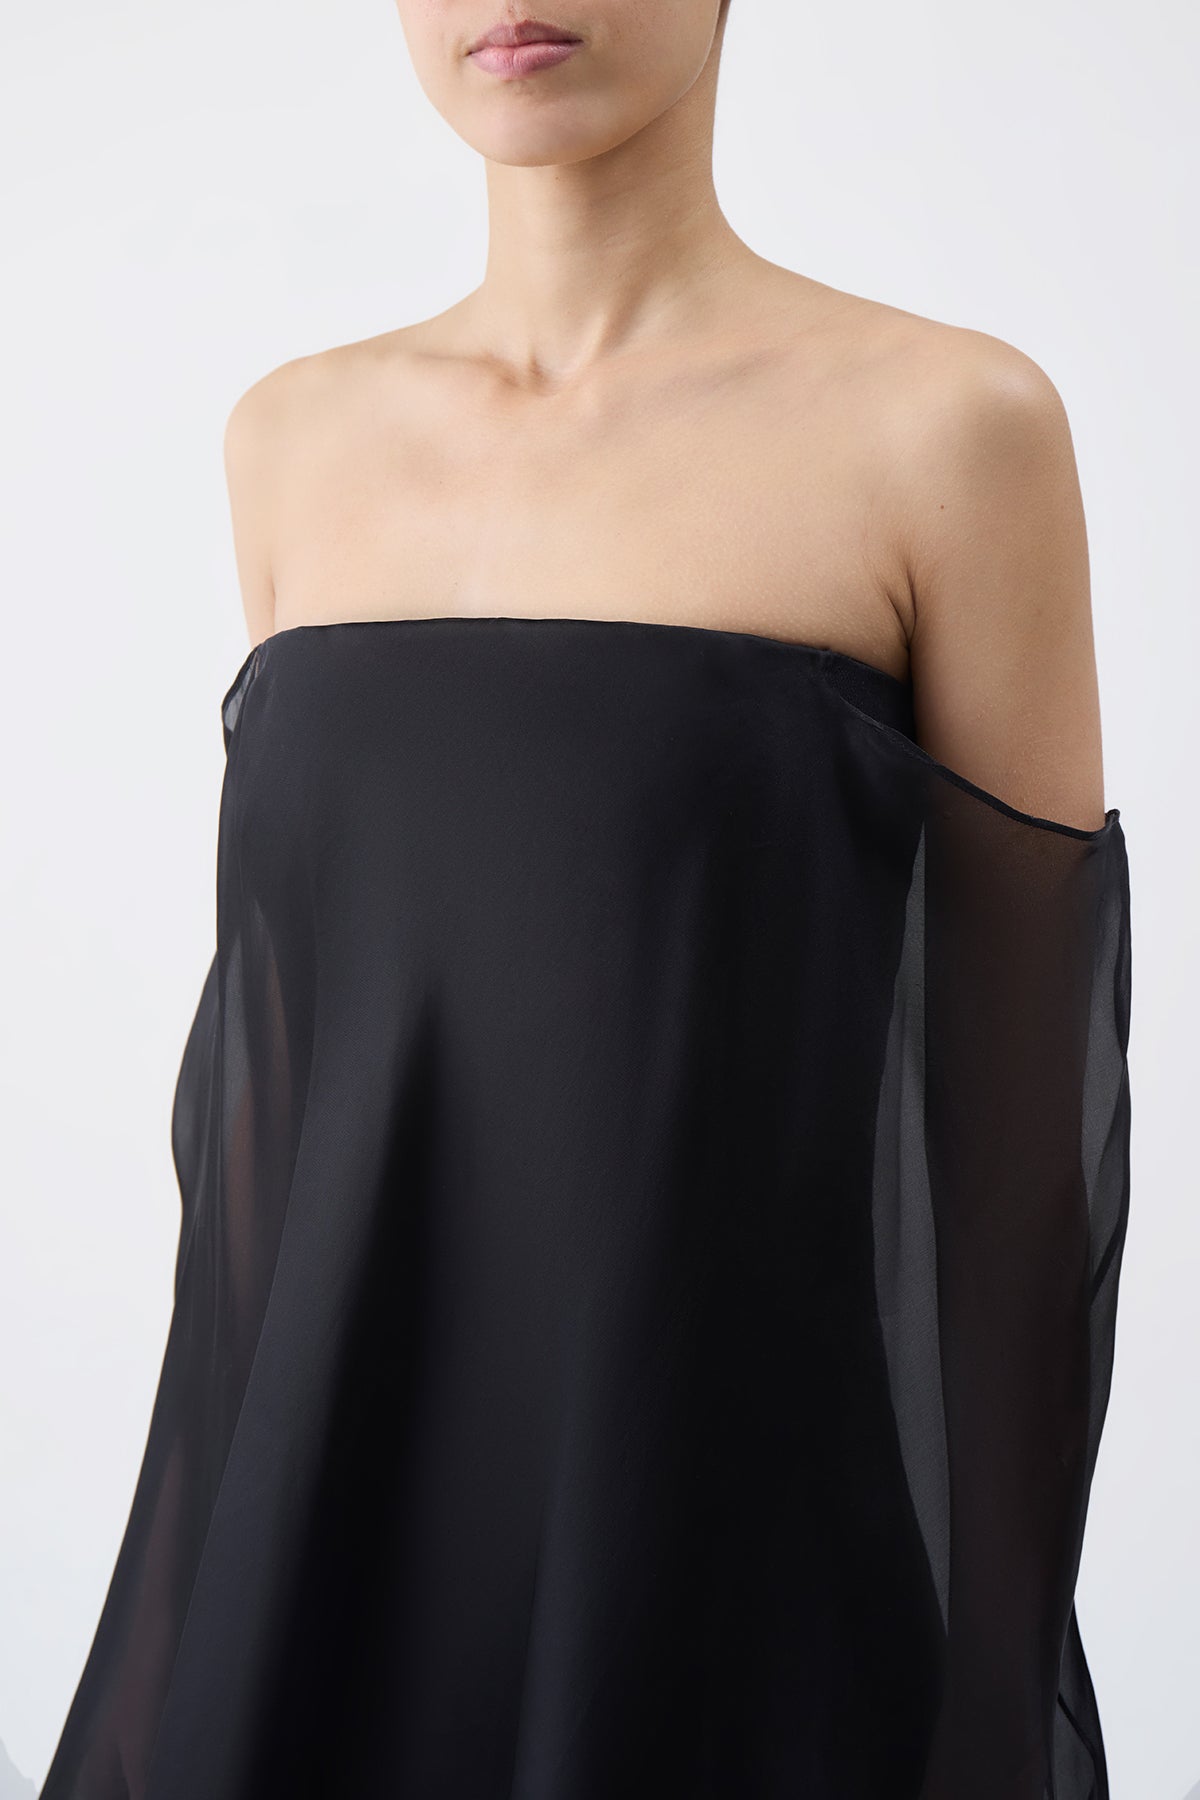 Marisha Dress in Black Textured Linen with Silk Organza Sheer Cape